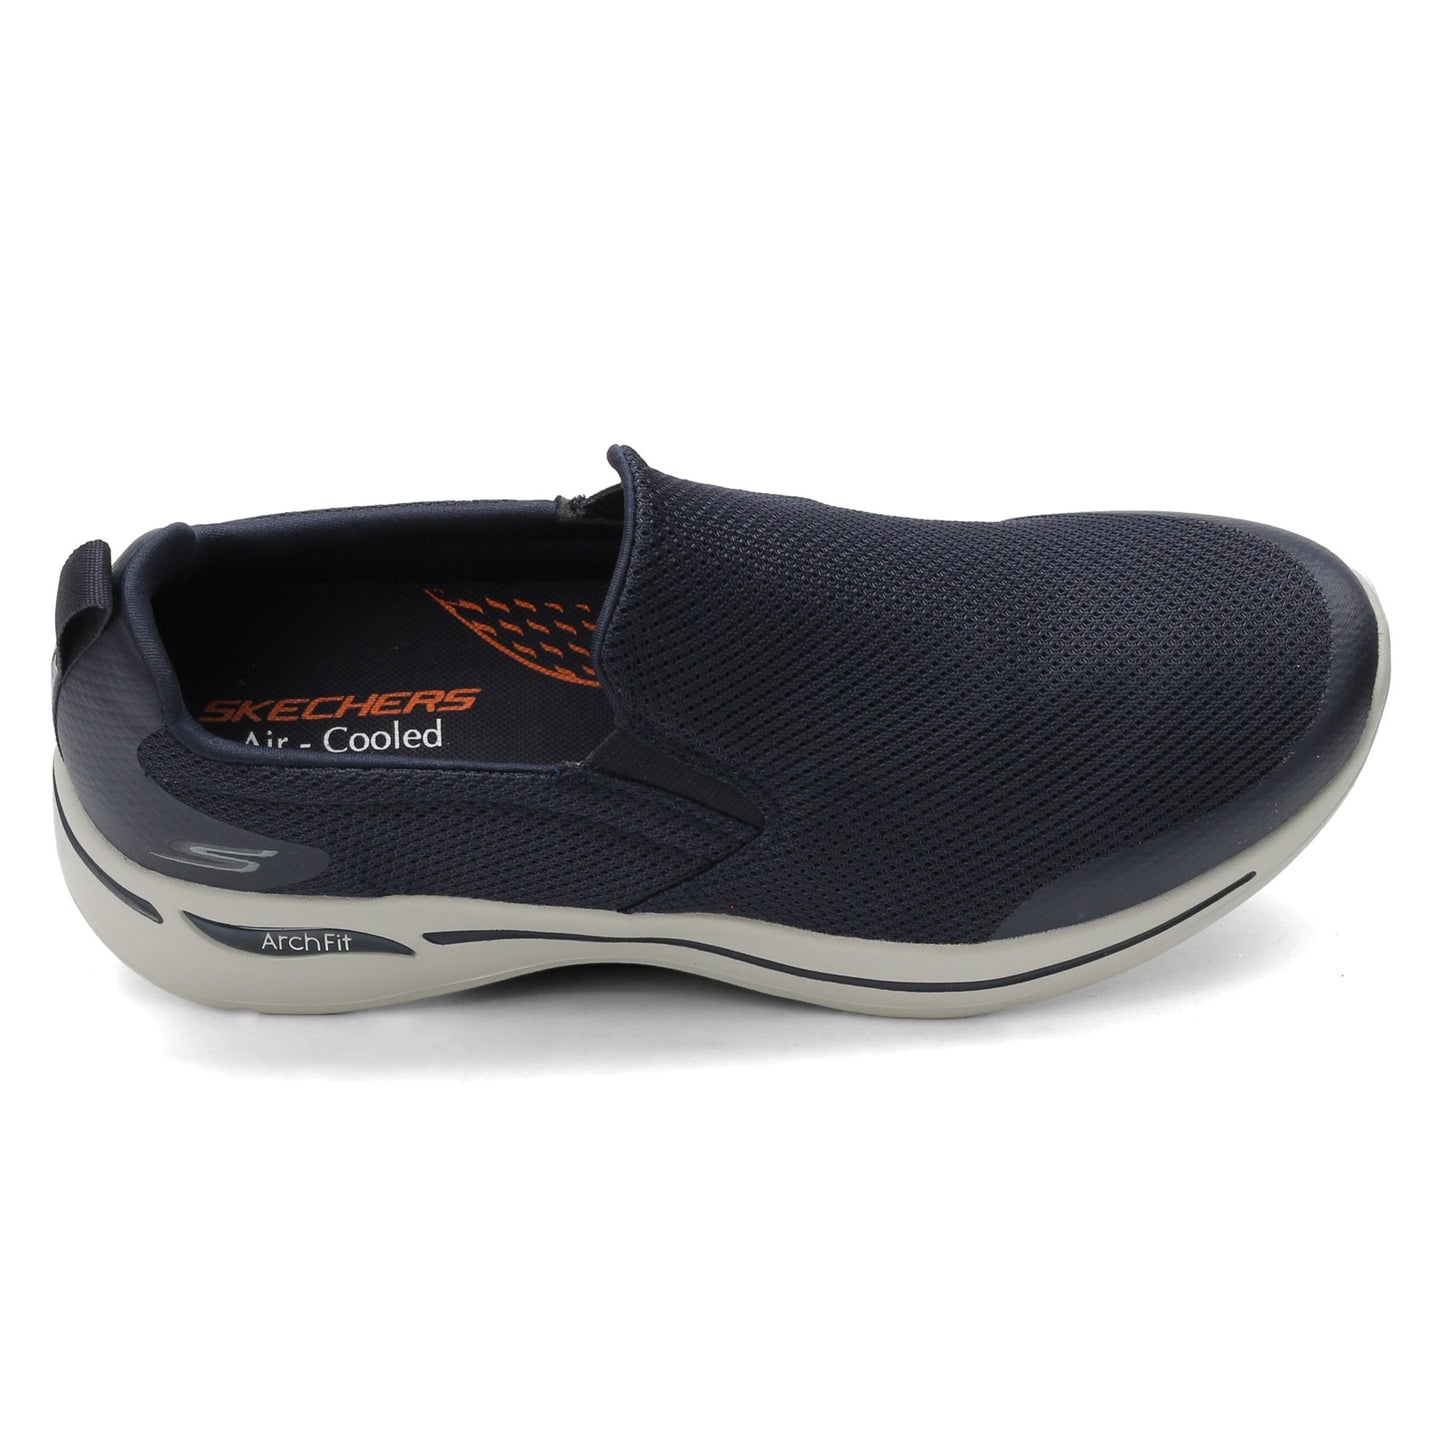 Peltz Shoes  Men's Skechers GOwalk Arch Fit - Togpath Slip-On NAVY GRAY 216121-NVGY